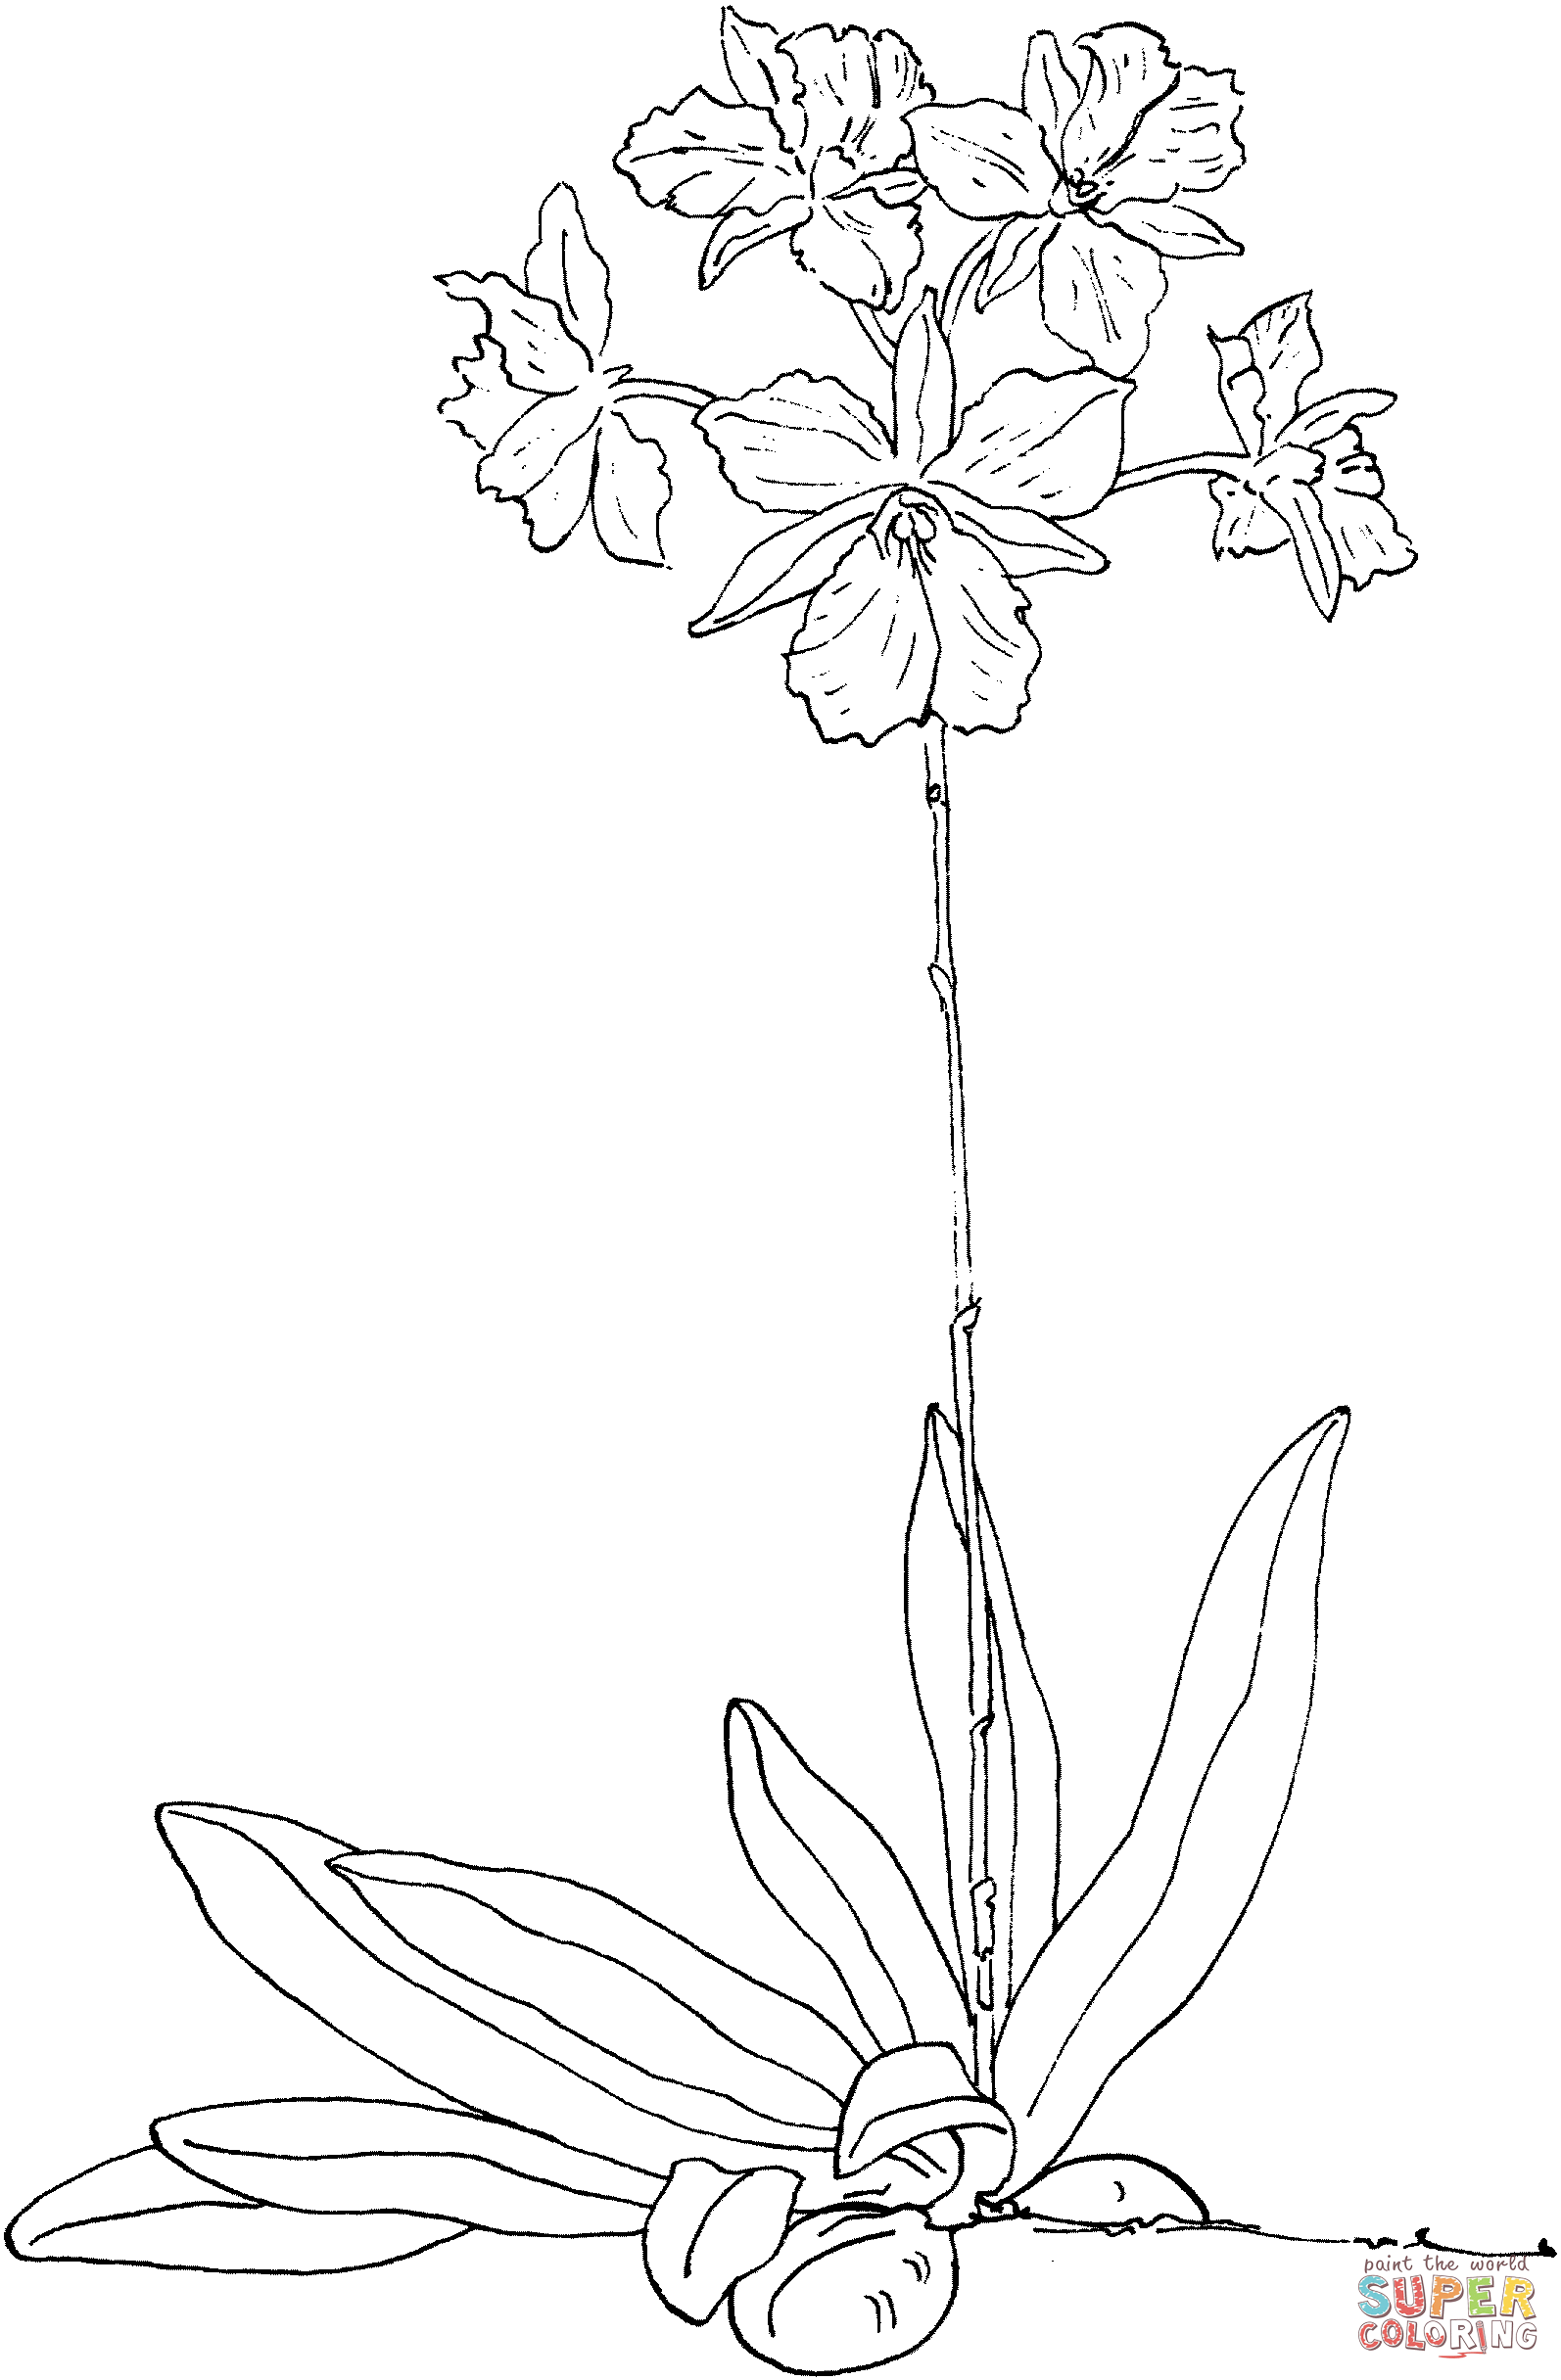 Broughtonia Sanguinea da Orchidea